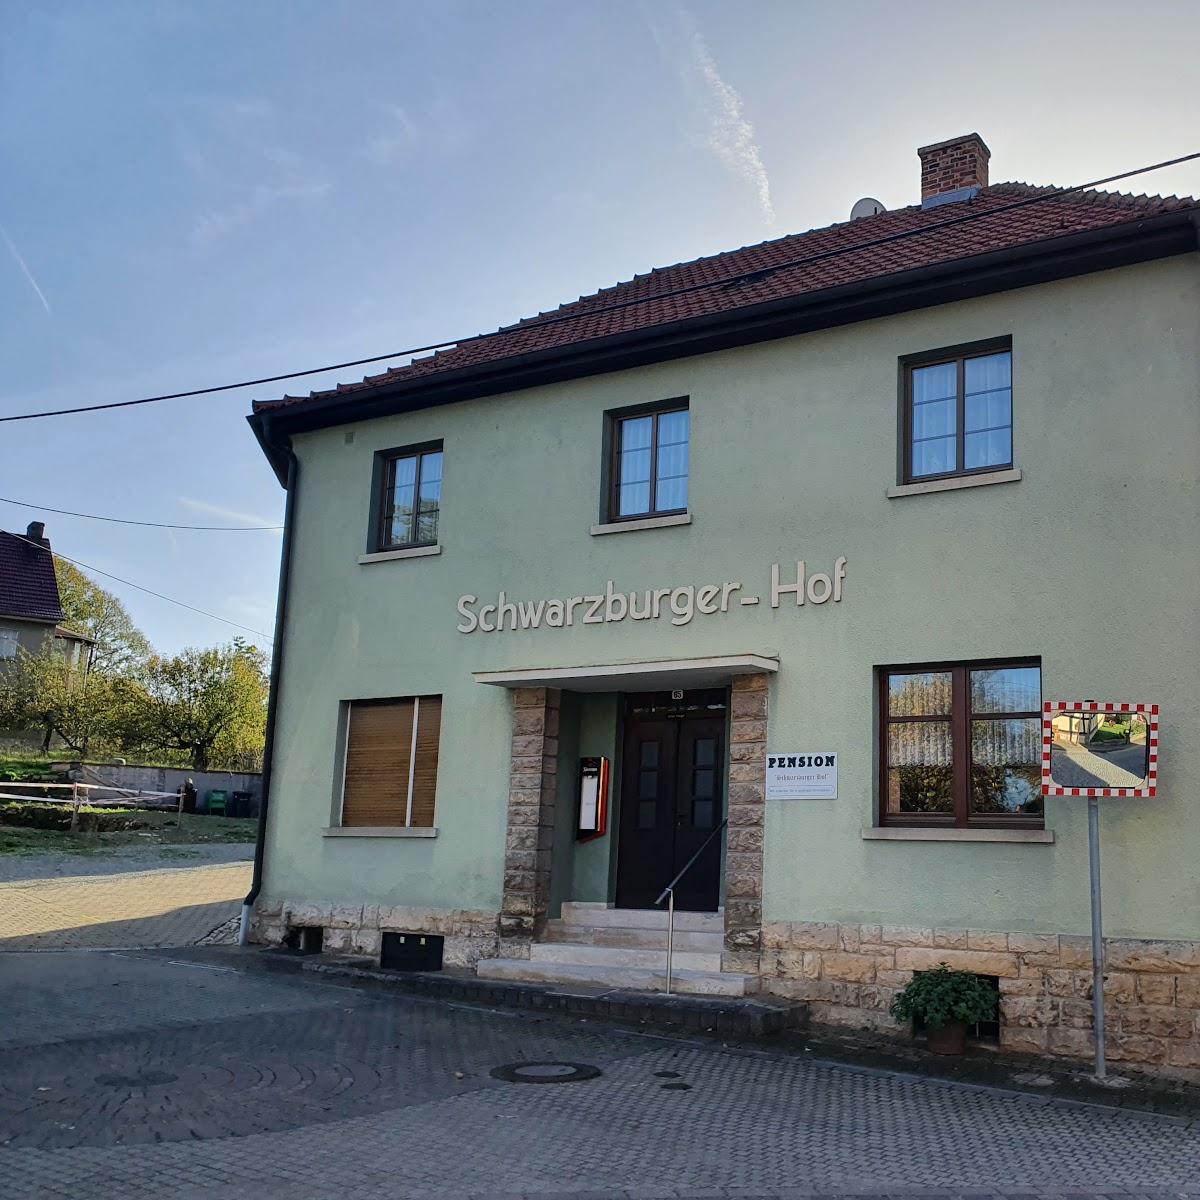 Restaurant "Schwarzburger Hof" in Stadtilm